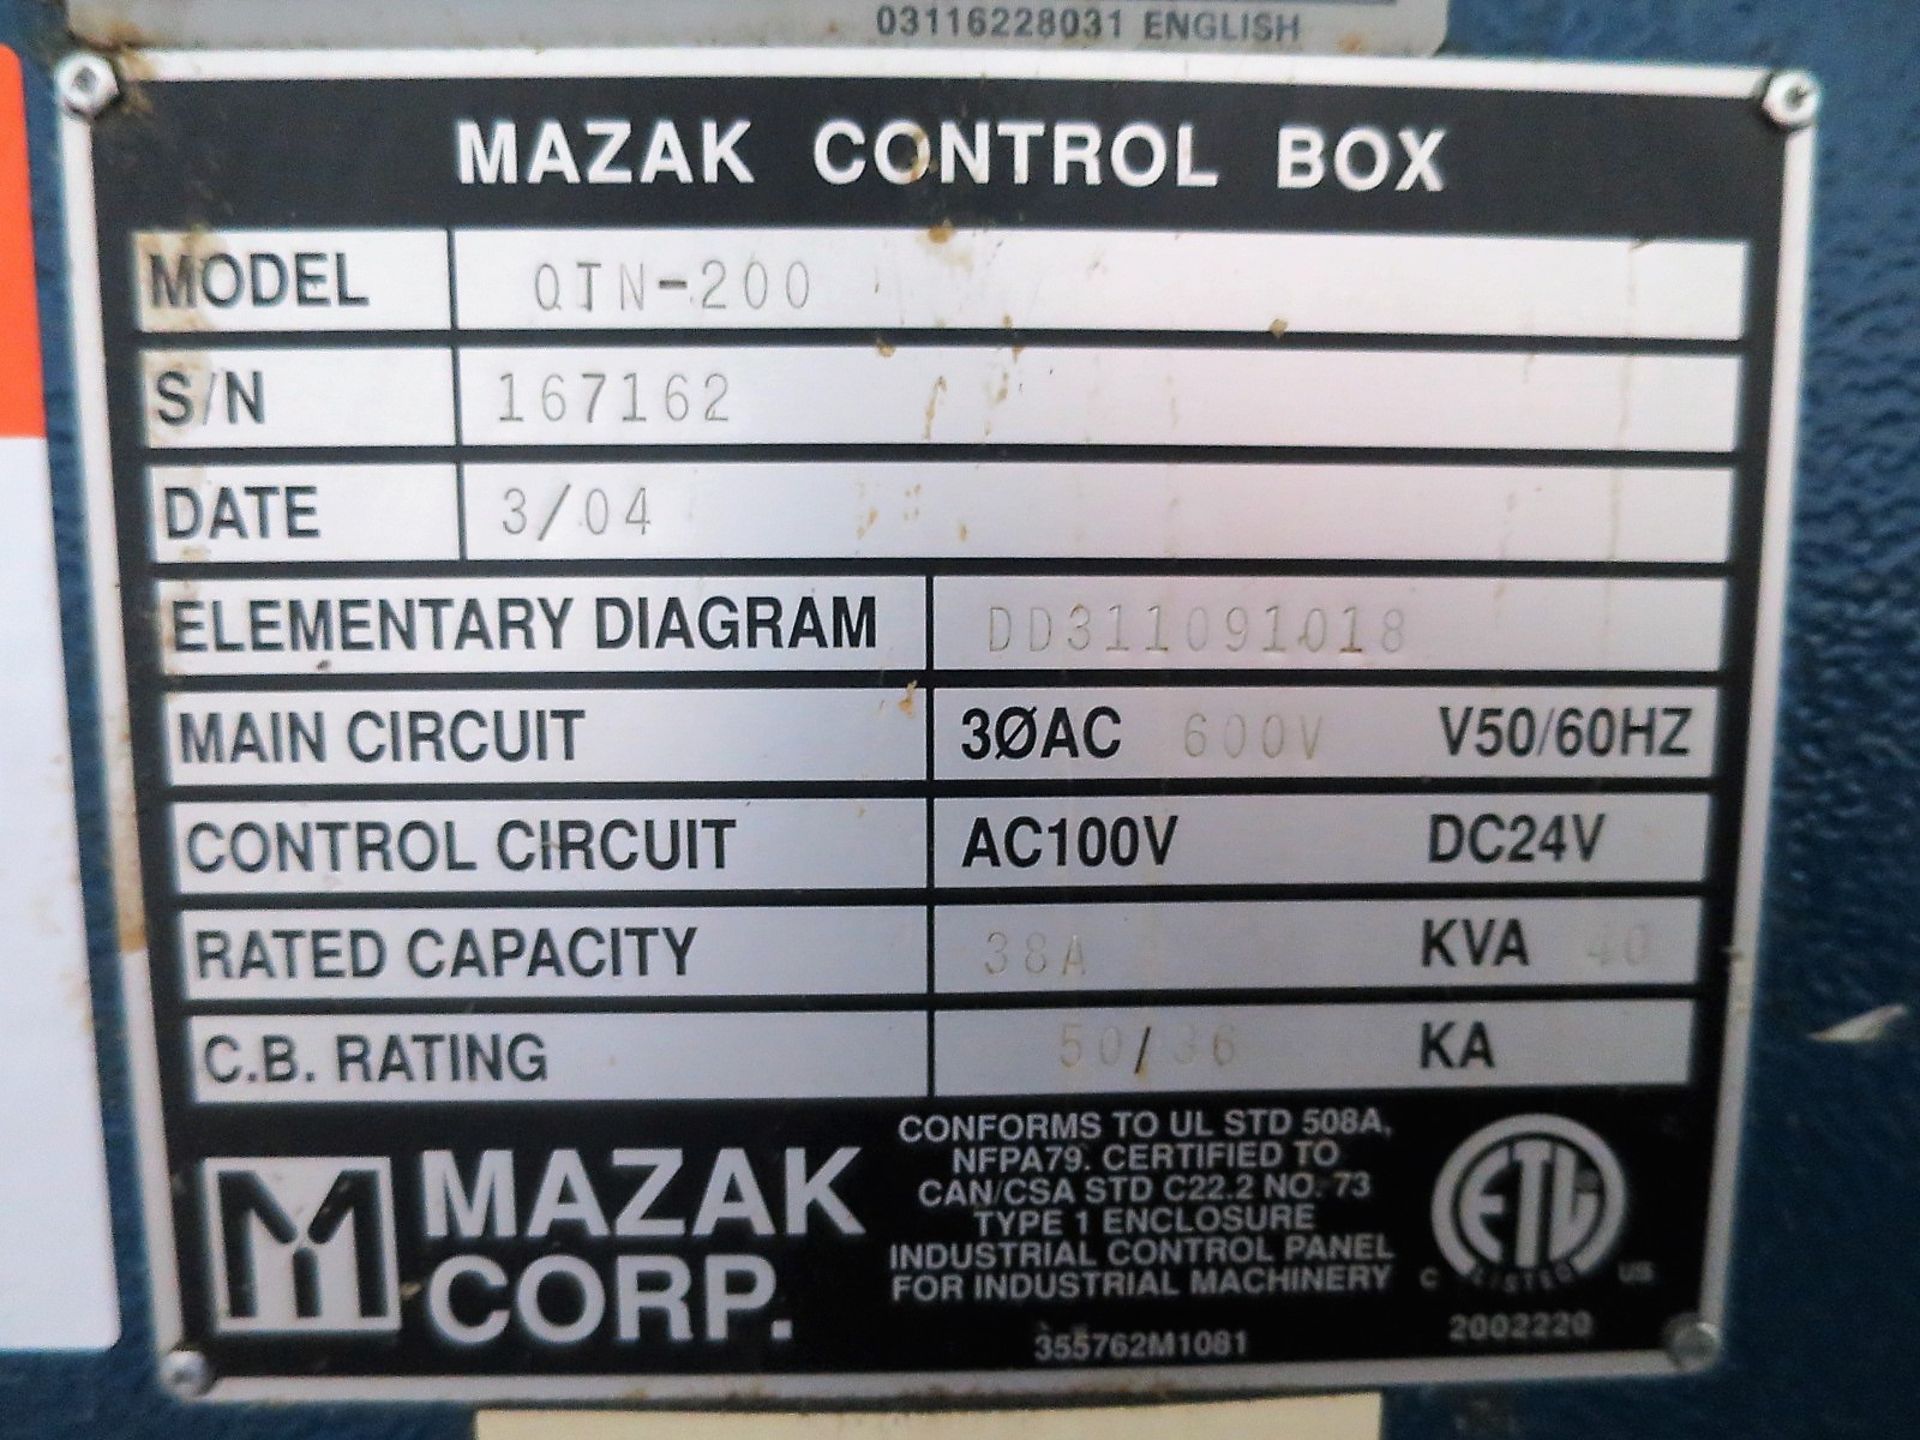 Mazak Quick Turn 200 QTN-200 CNC Lathe, S/N 167162, New 2004 - Image 8 of 8